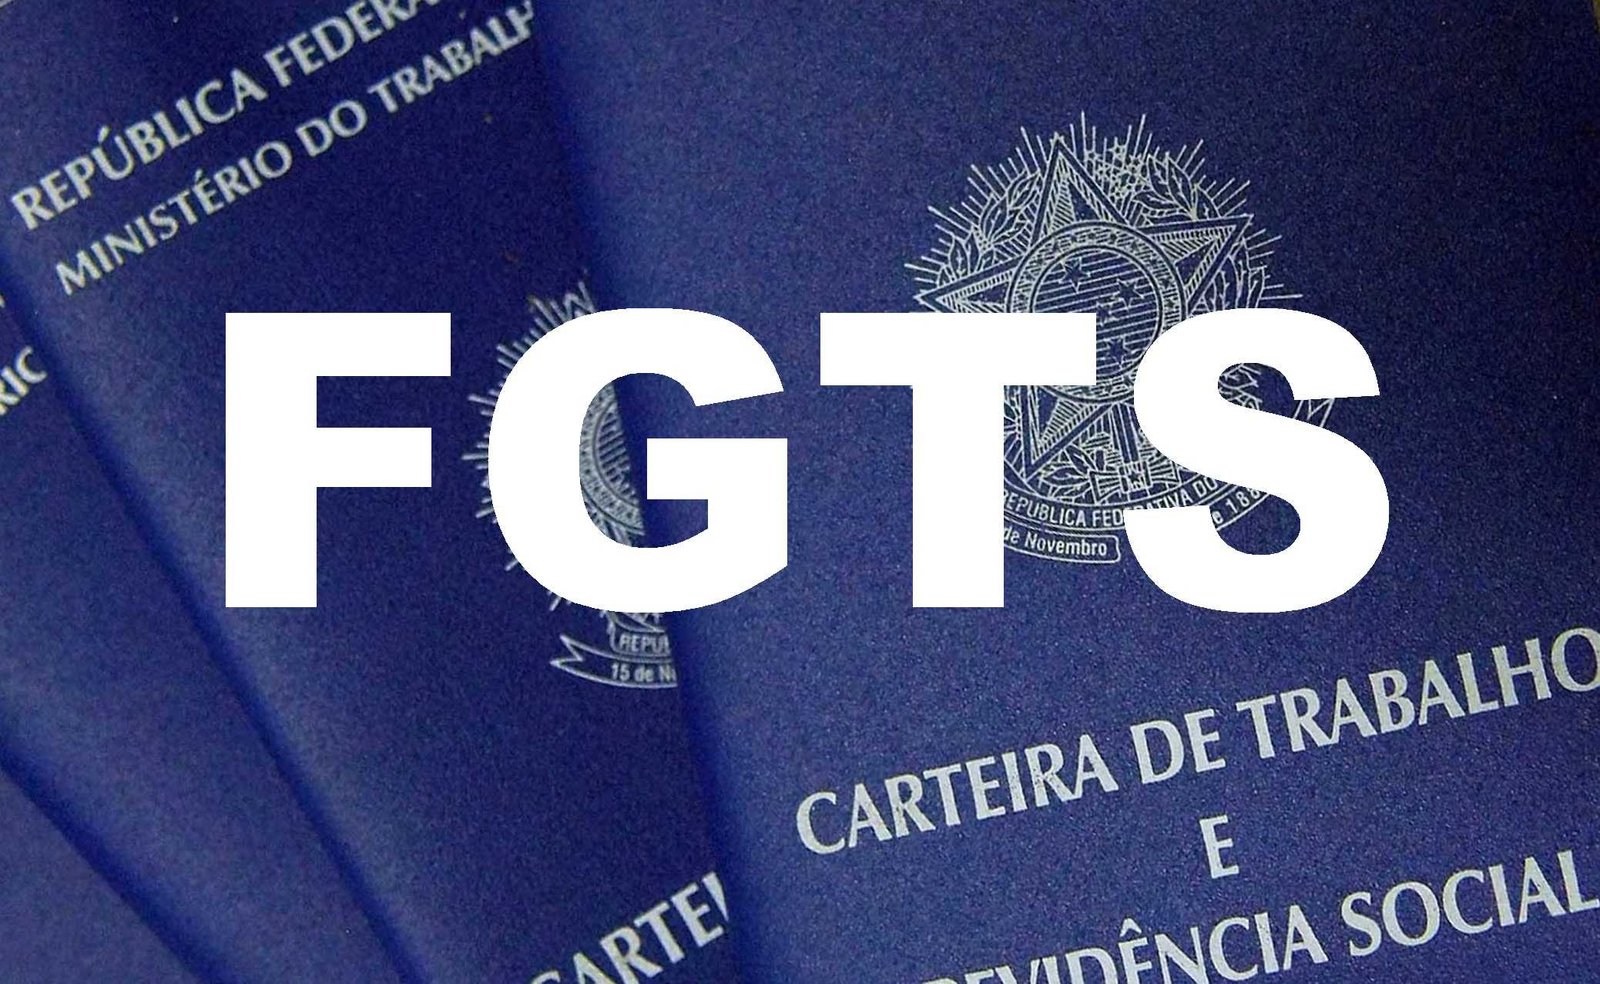 You are currently viewing O que é o FGTS: fundo de garantia do trabalhador brasileiro